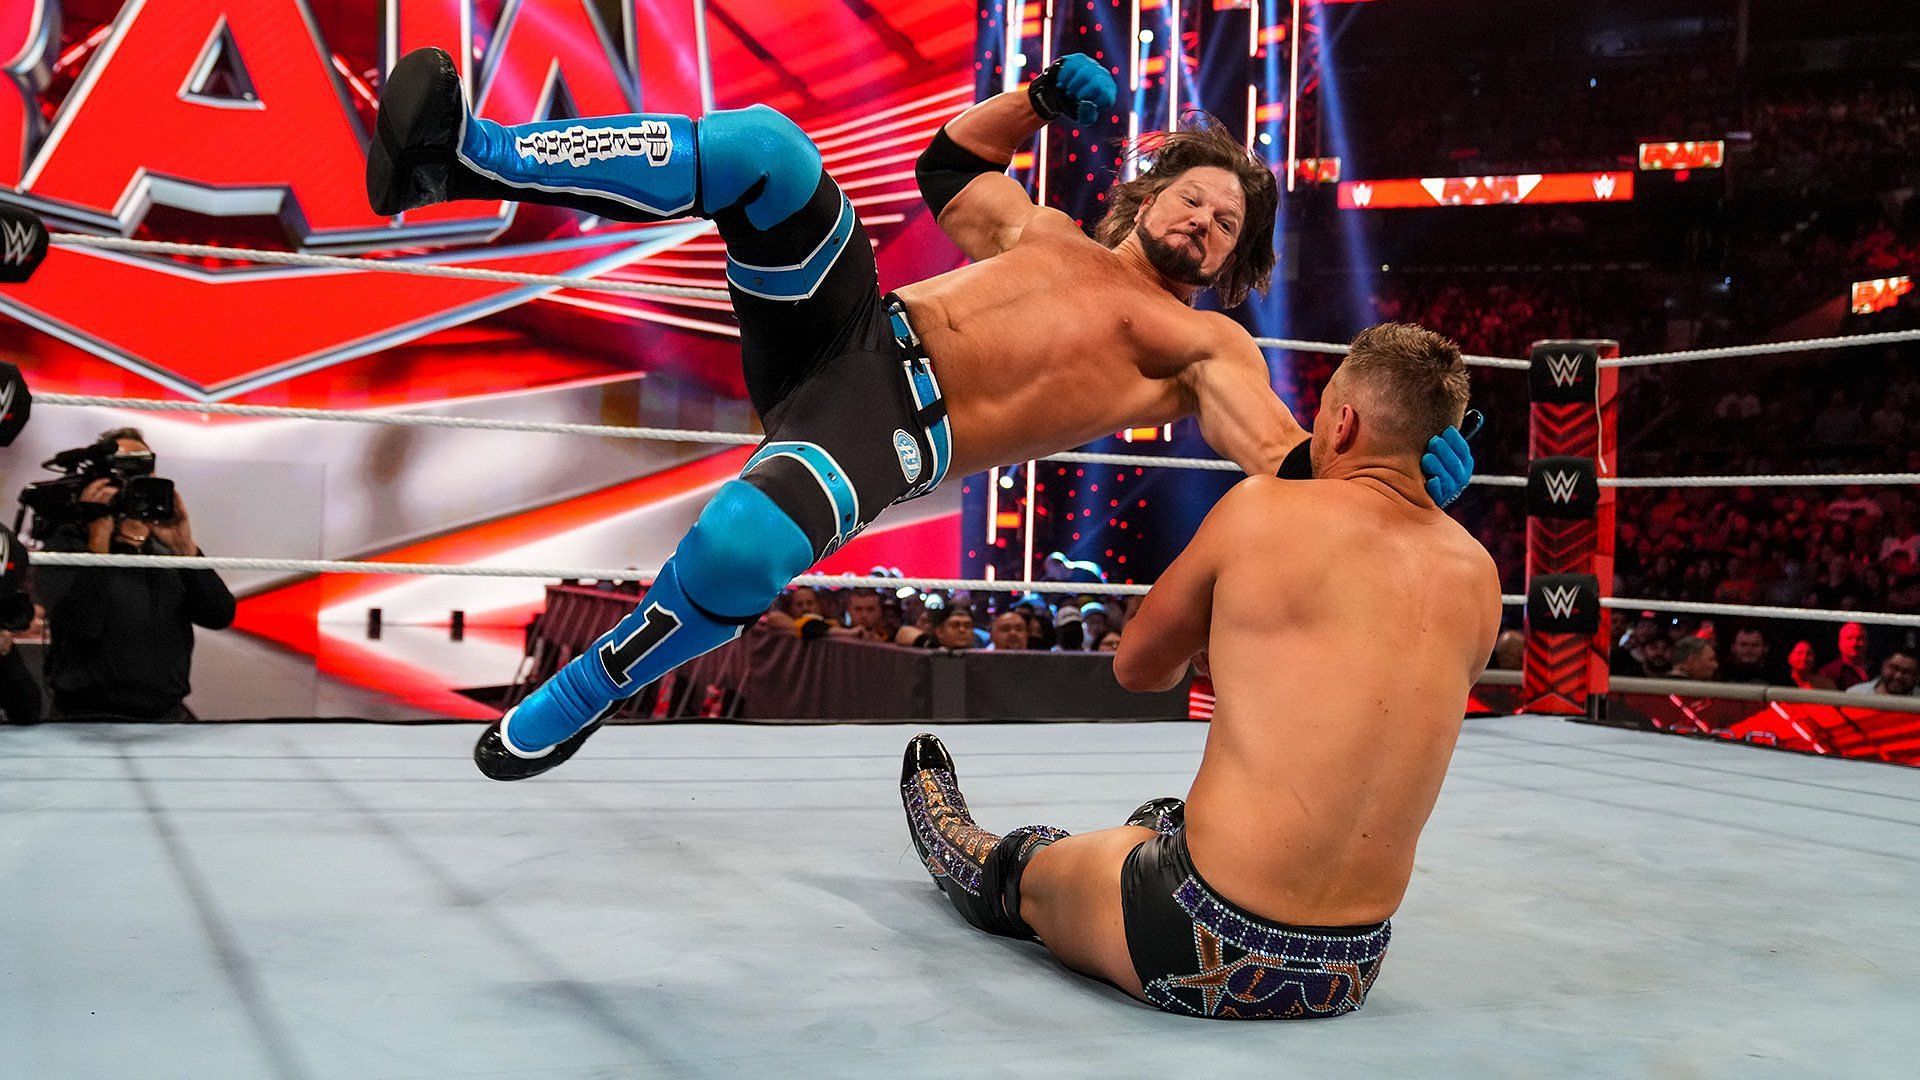 AJ Styles pummeling The Miz